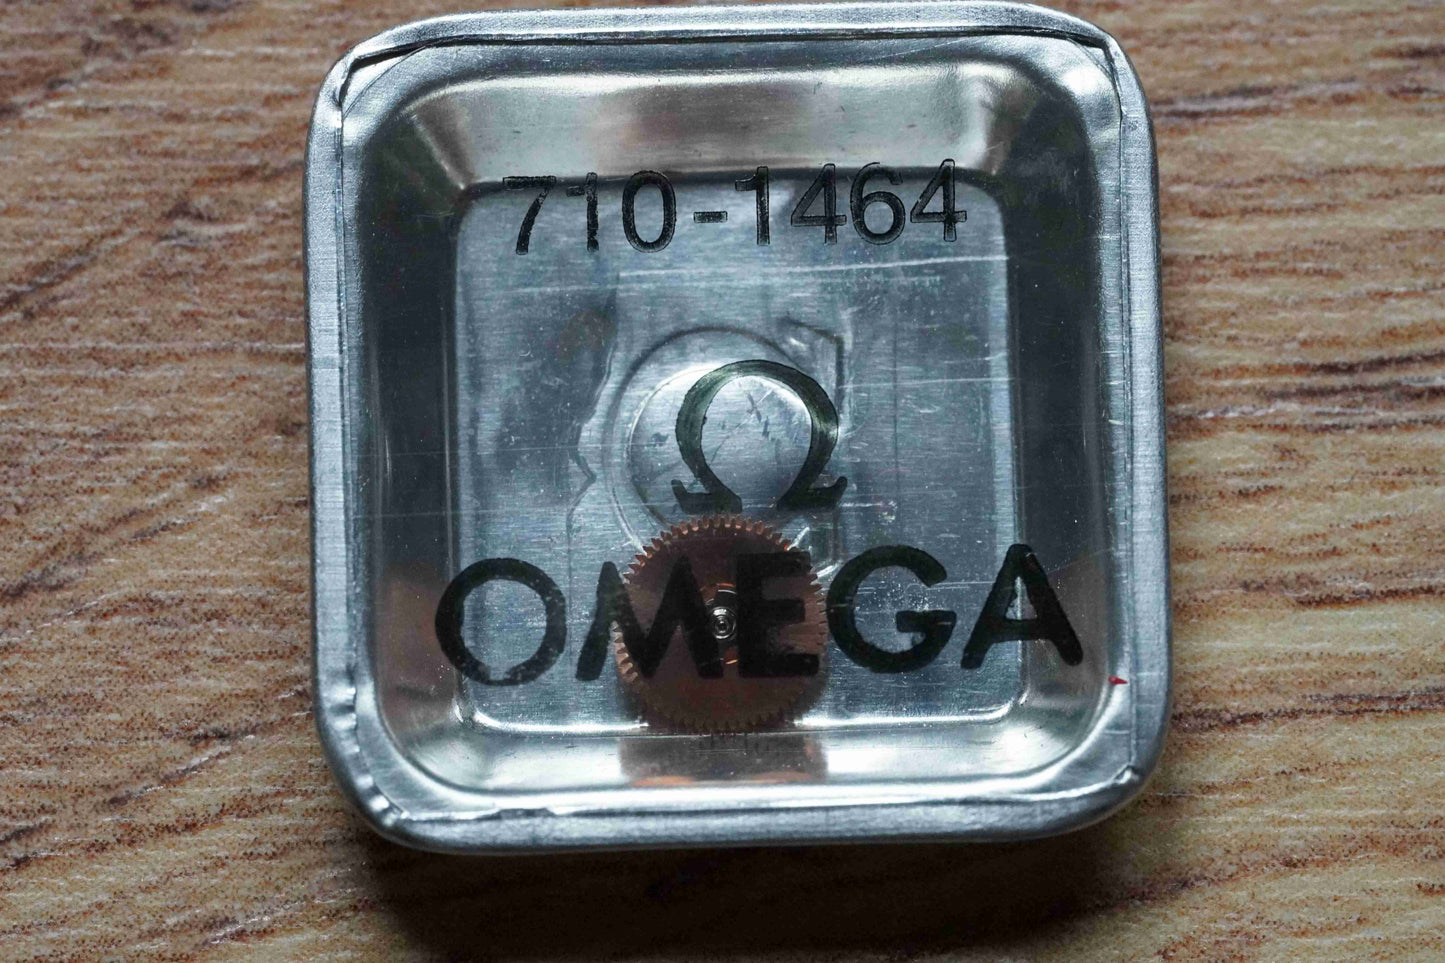 Omega cal 710 part 1464 Reverse wheel